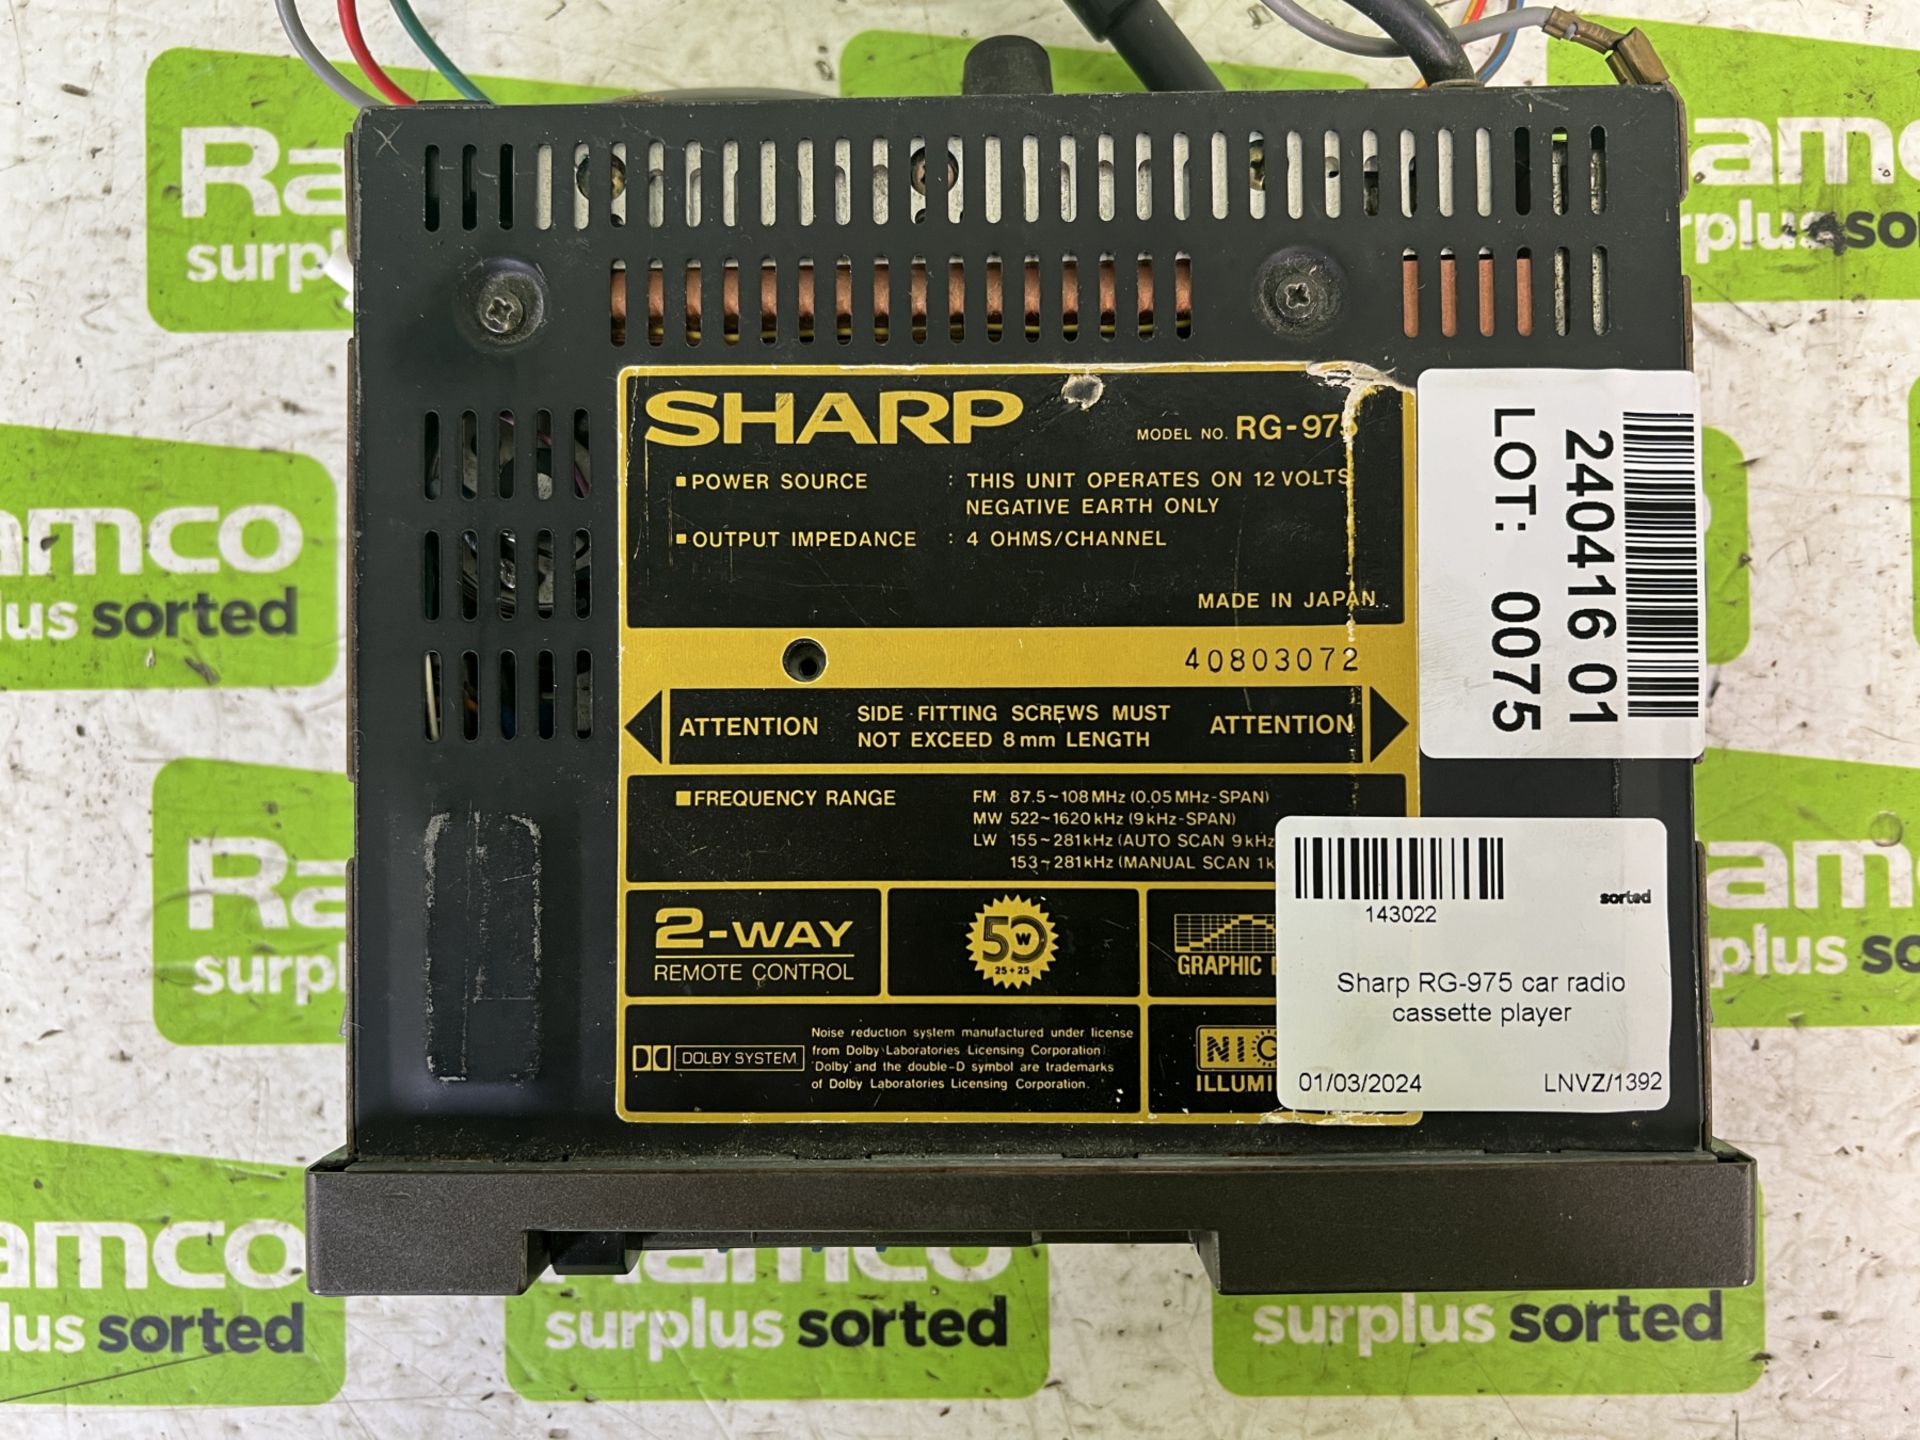 Sharp RG-975 car radio cassette player - Image 3 of 4